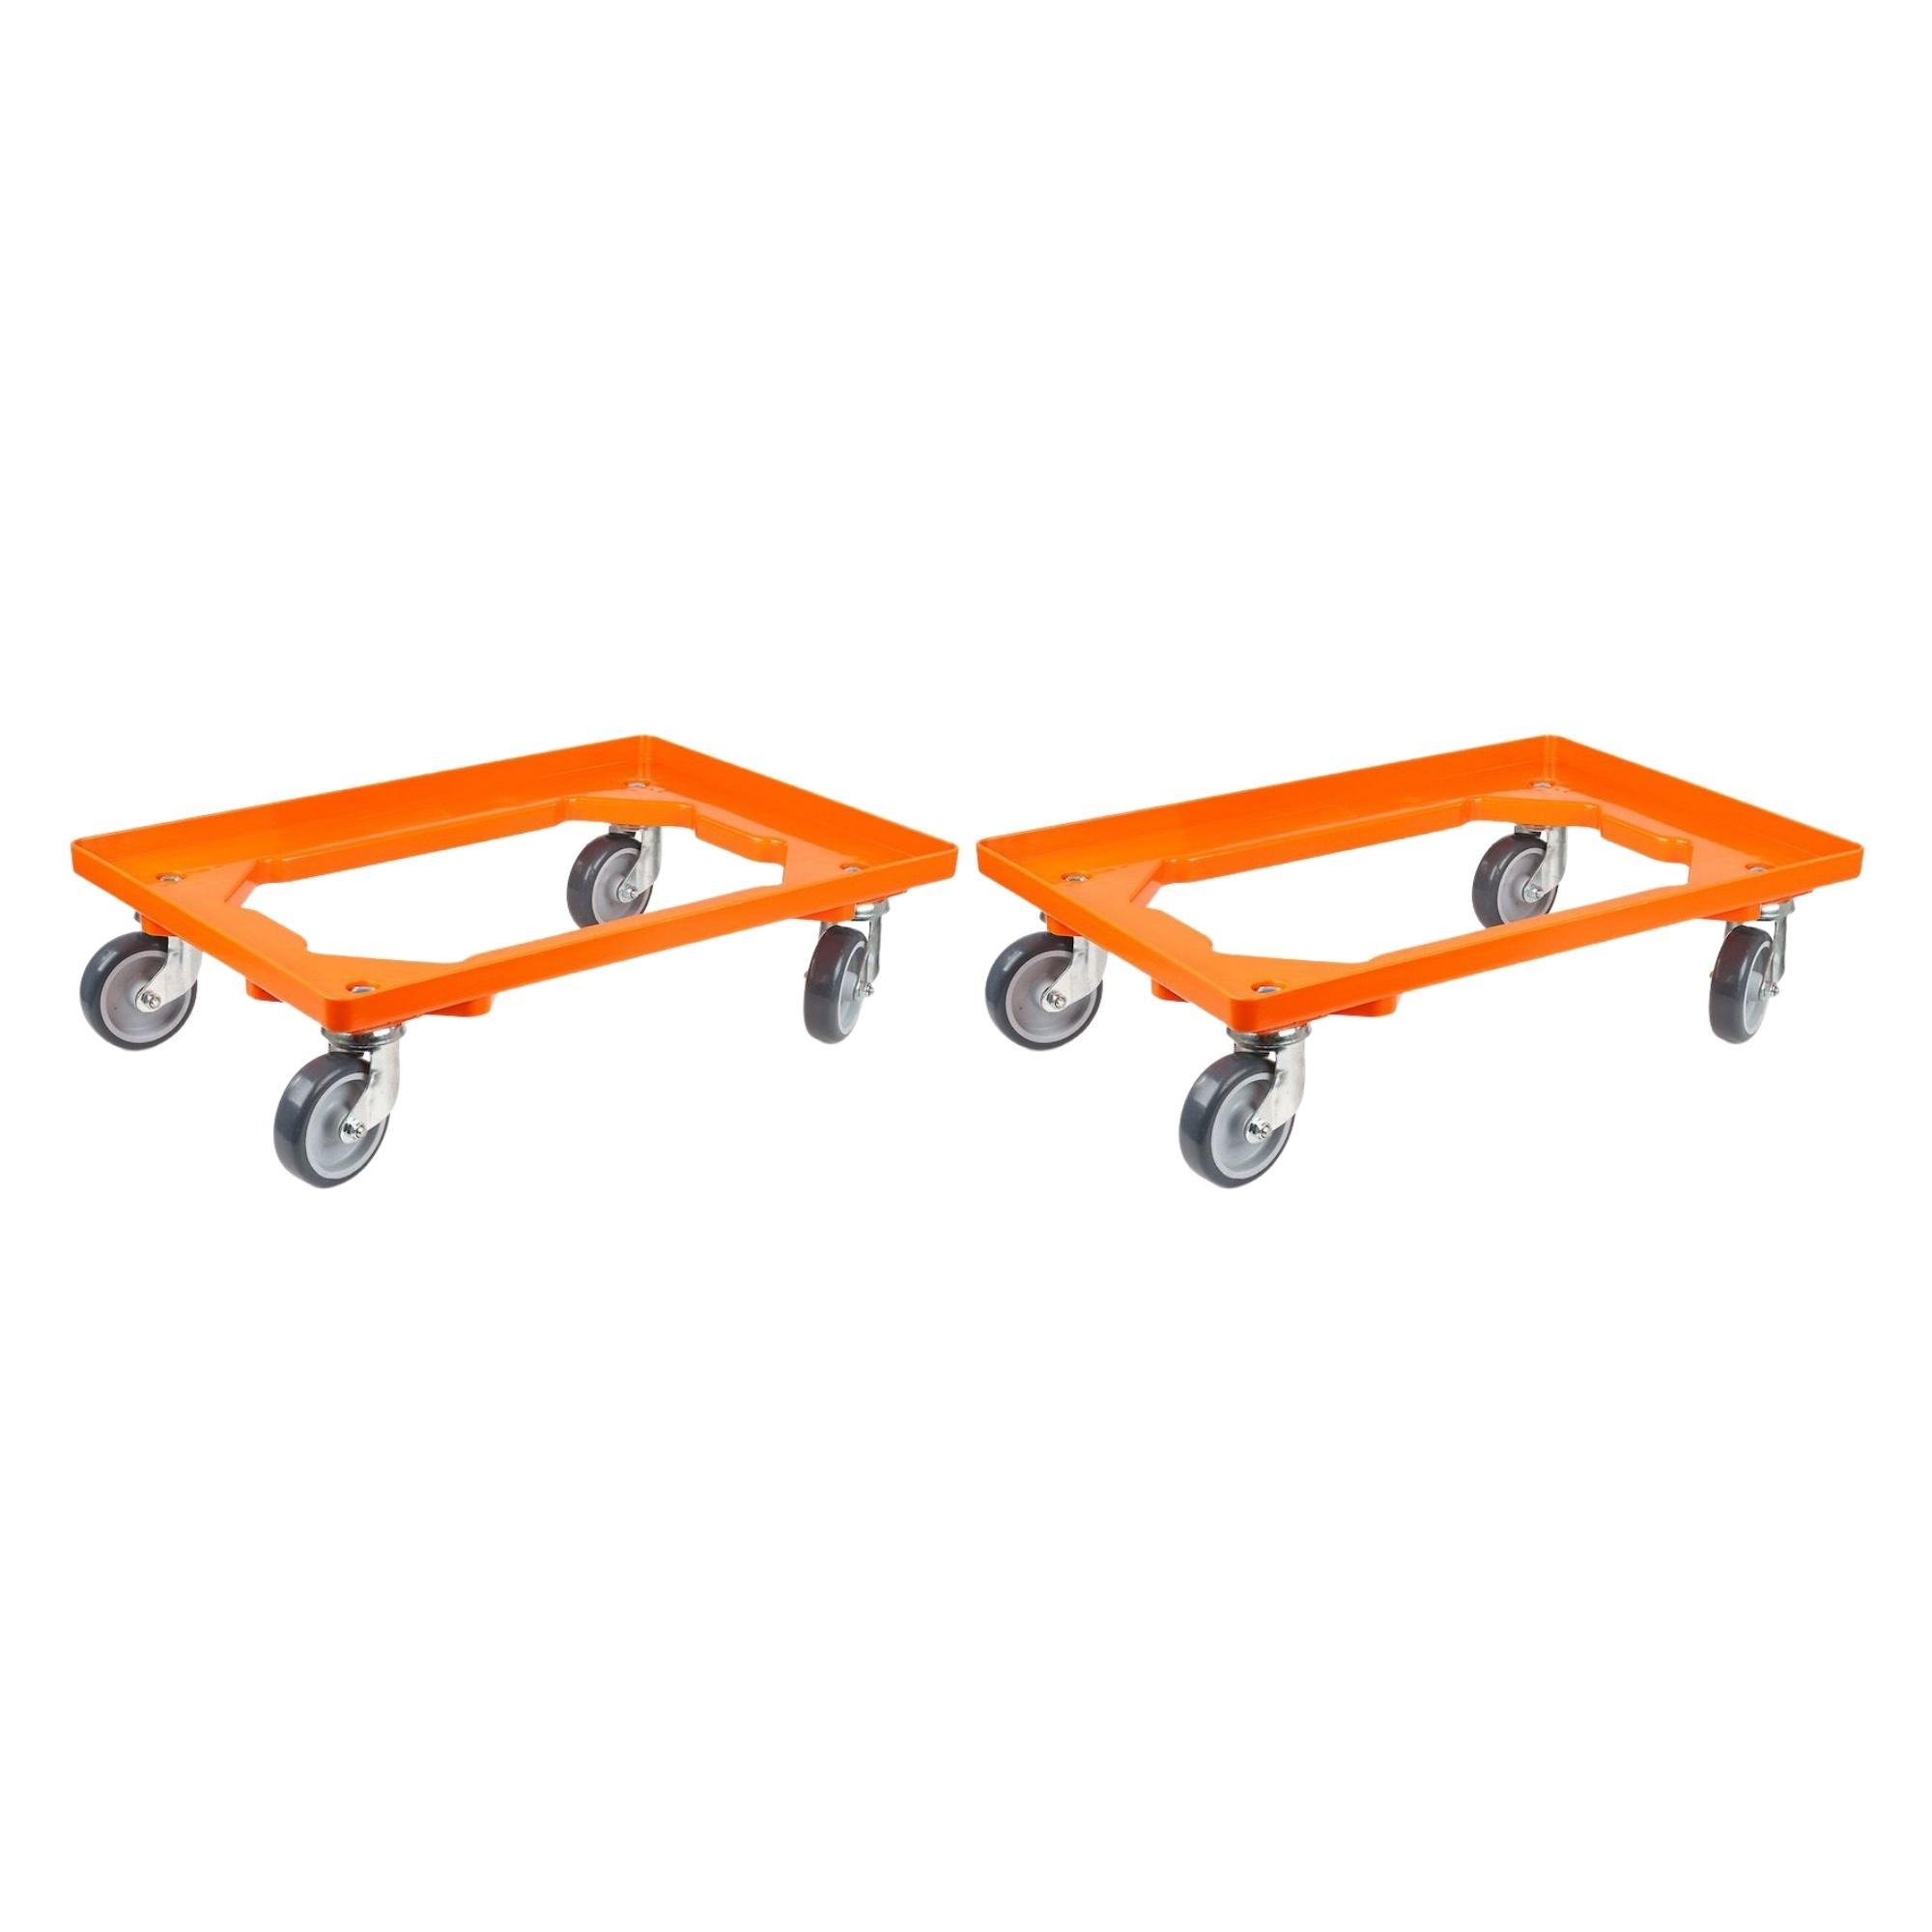 SparSet 2x Transportroller für Euroboxen 60x40cm mit Gummiräder orange | Offenes Deck | 2 Lenkrollen & 2 Bockrollen | Traglast 300kg | Kistenroller Logistikroller Rollwagen Profi-Fahrgestell